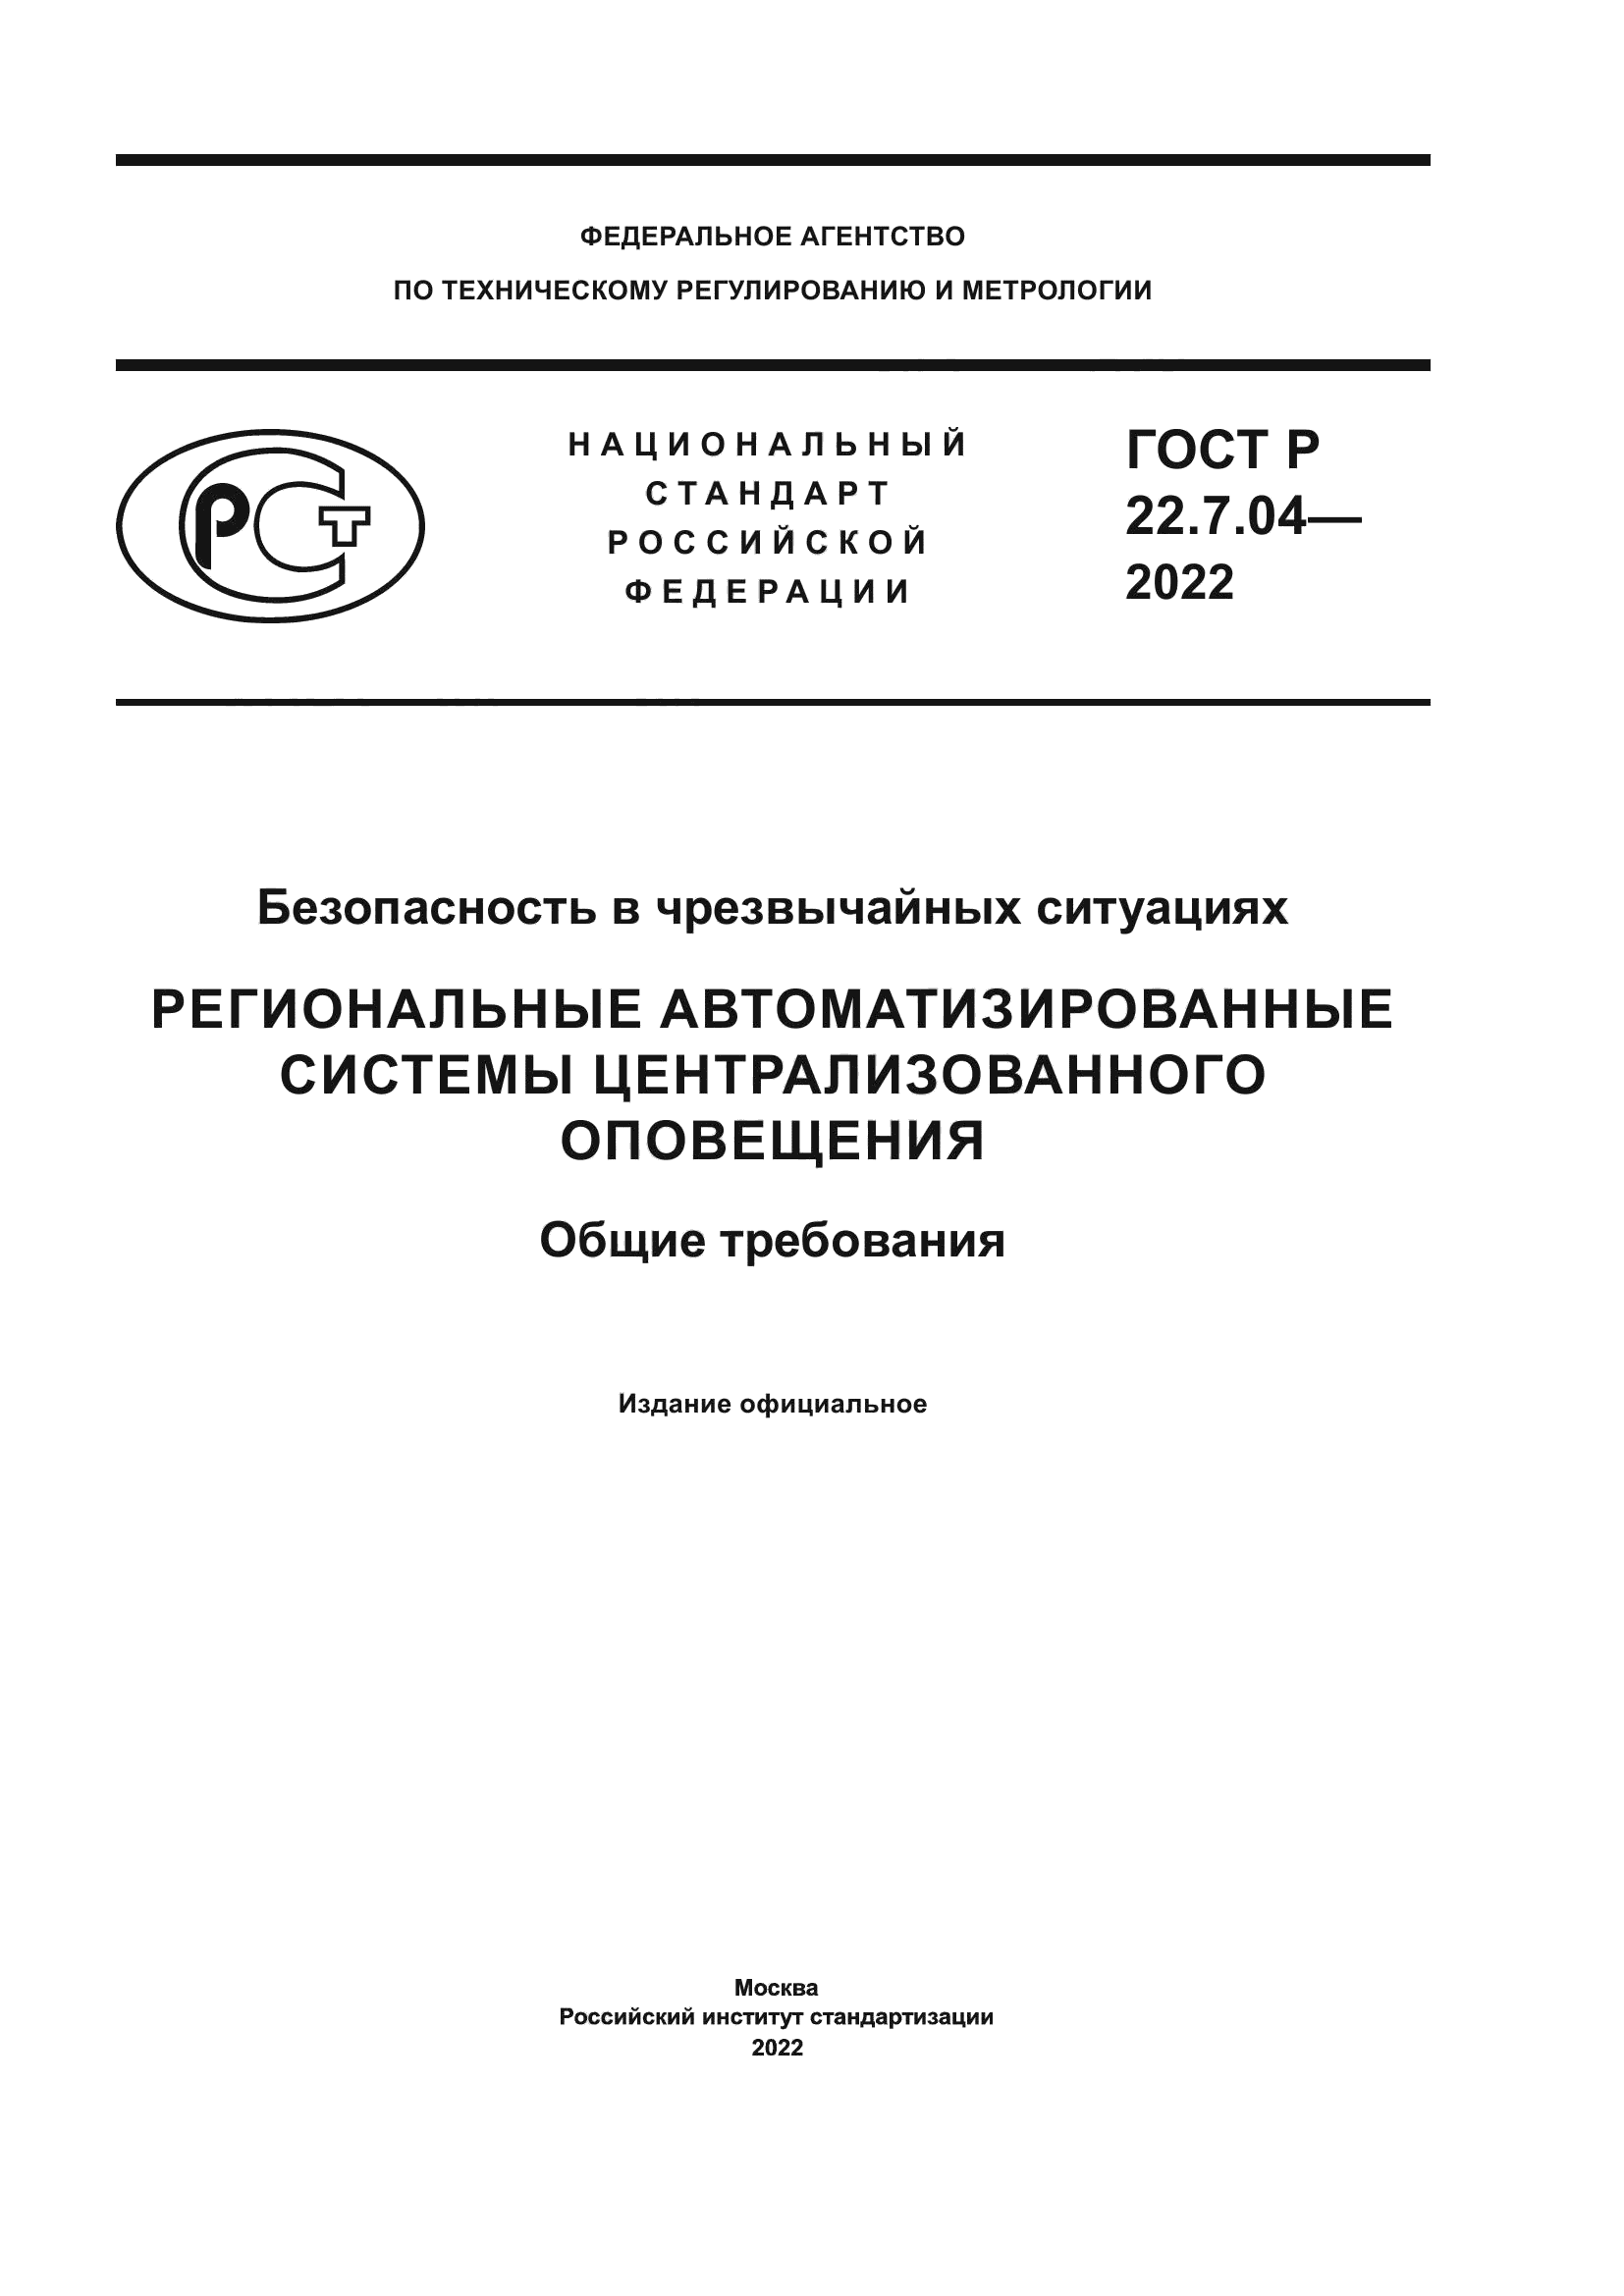 ГОСТ Р 22.7.04-2022